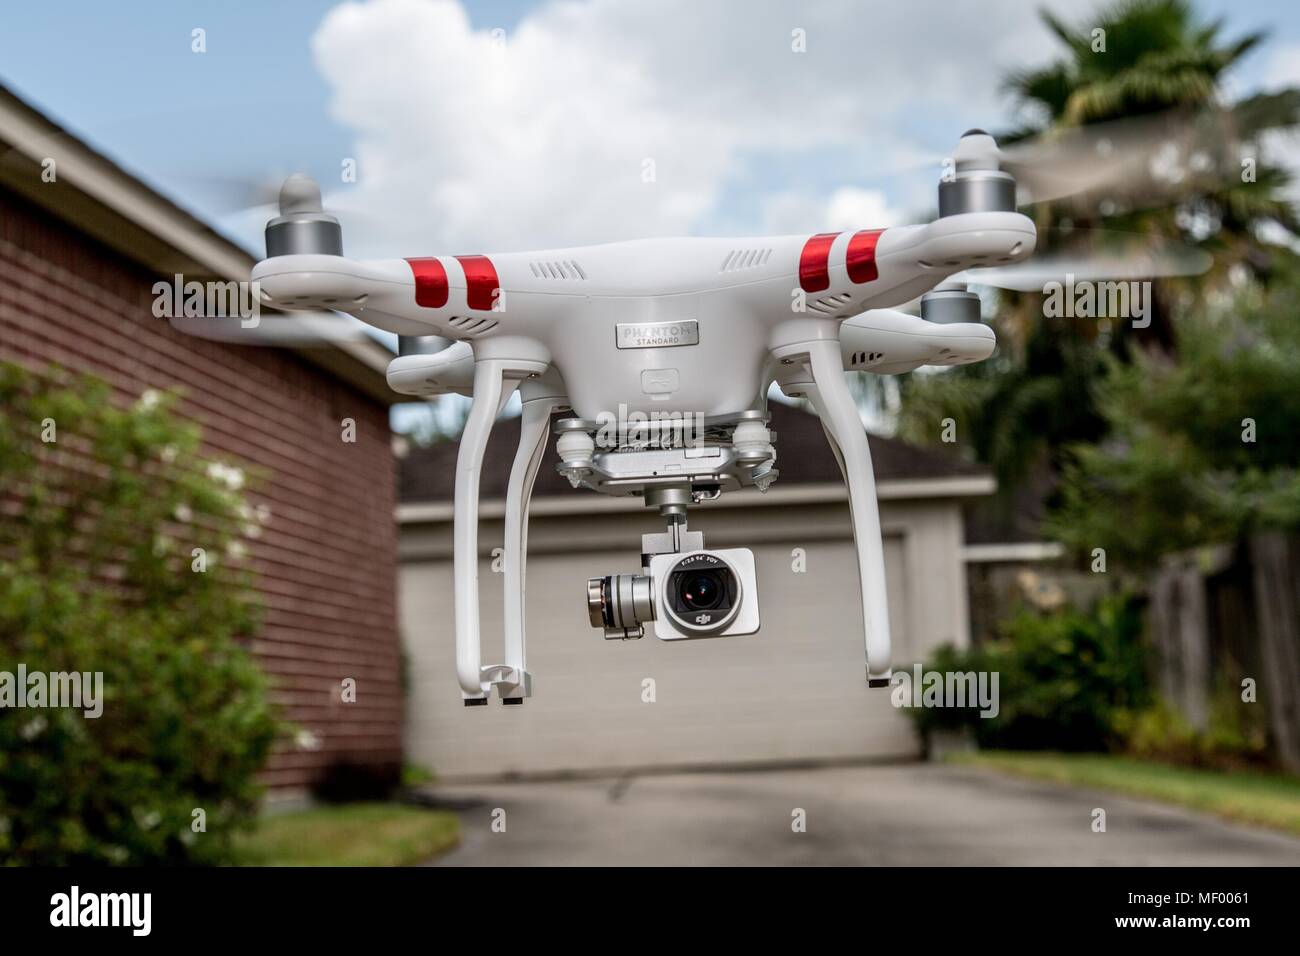 drone in the backyard Stock Photo